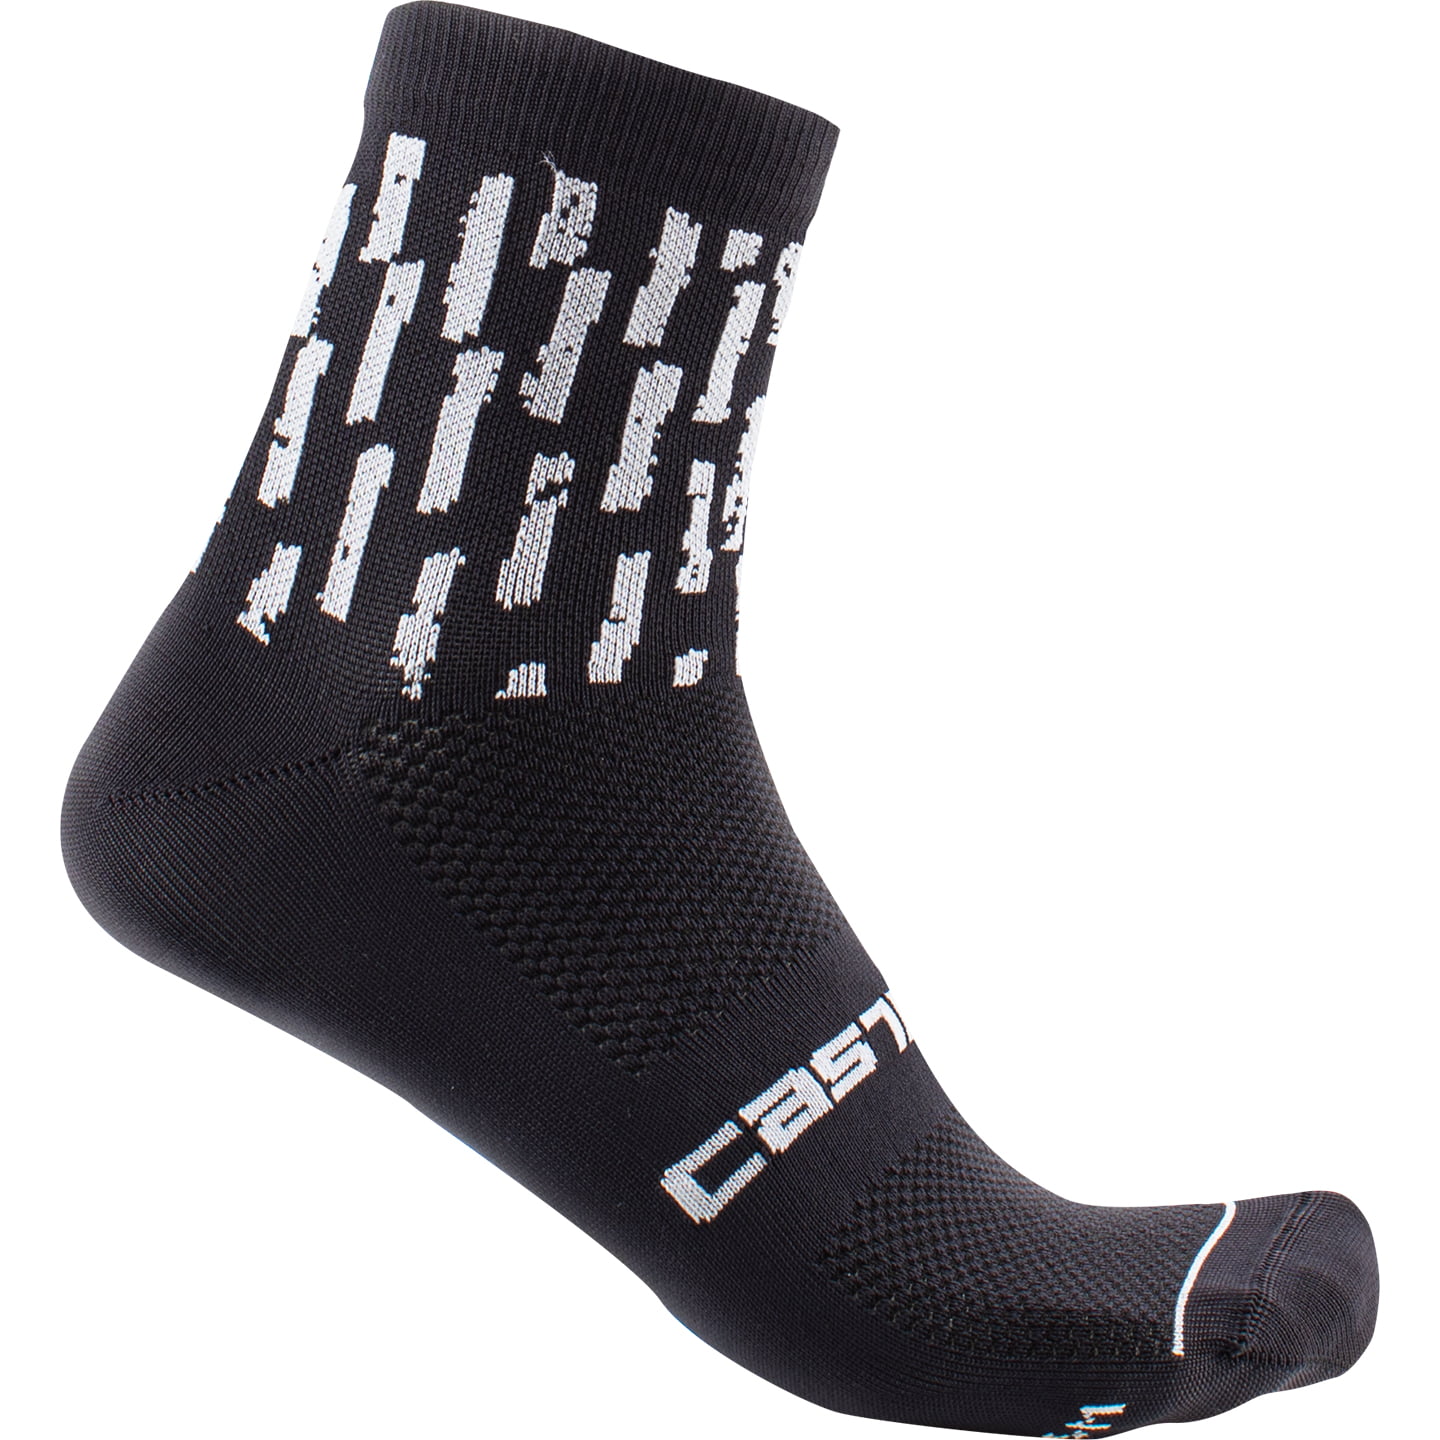 CASTELLI Aero Pro 9 Women’s Cycling Socks Women’s Cycling Socks, size L-XL, MTB socks, Cycling clothing